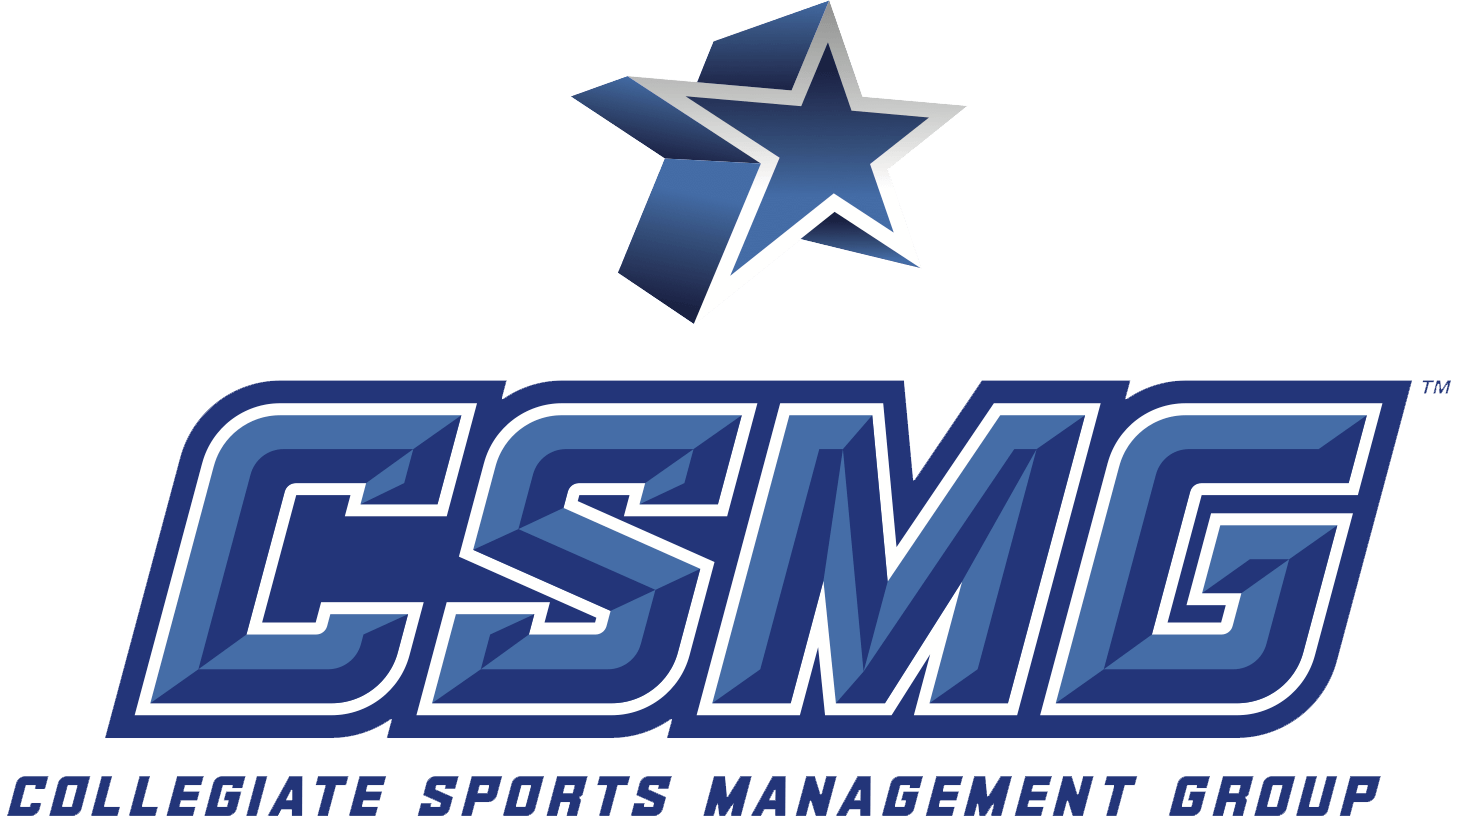 Collegiate Sports Management Group logo